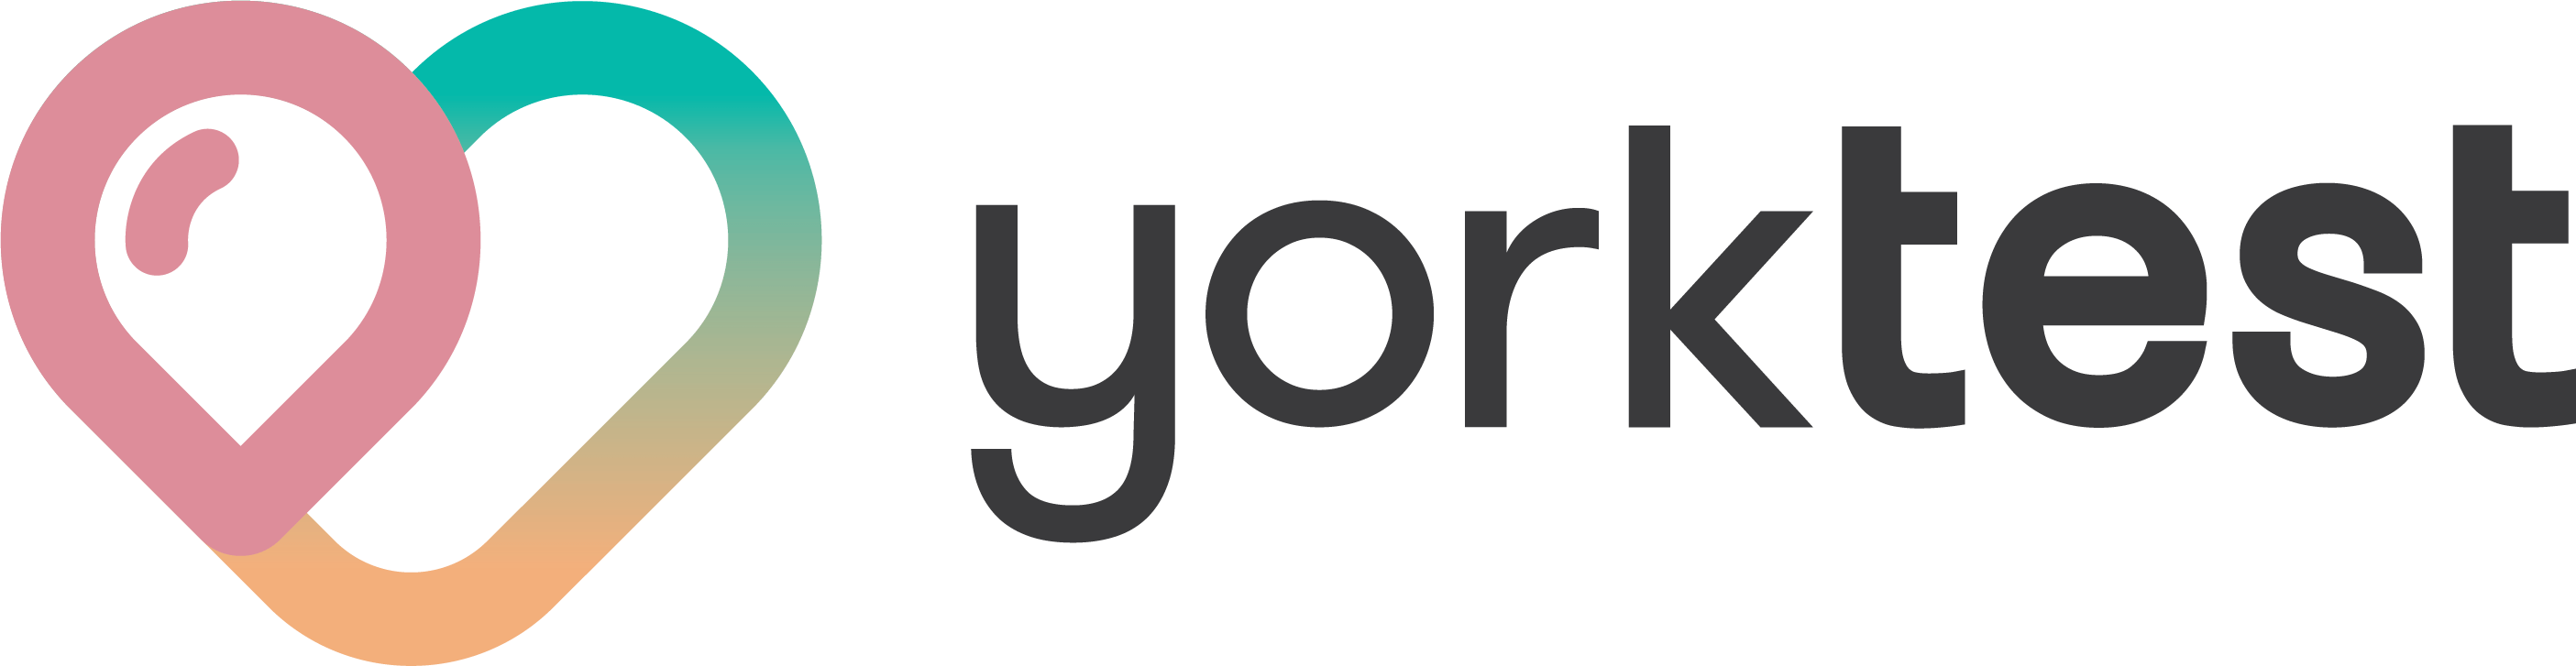 YorkTest-logo.png